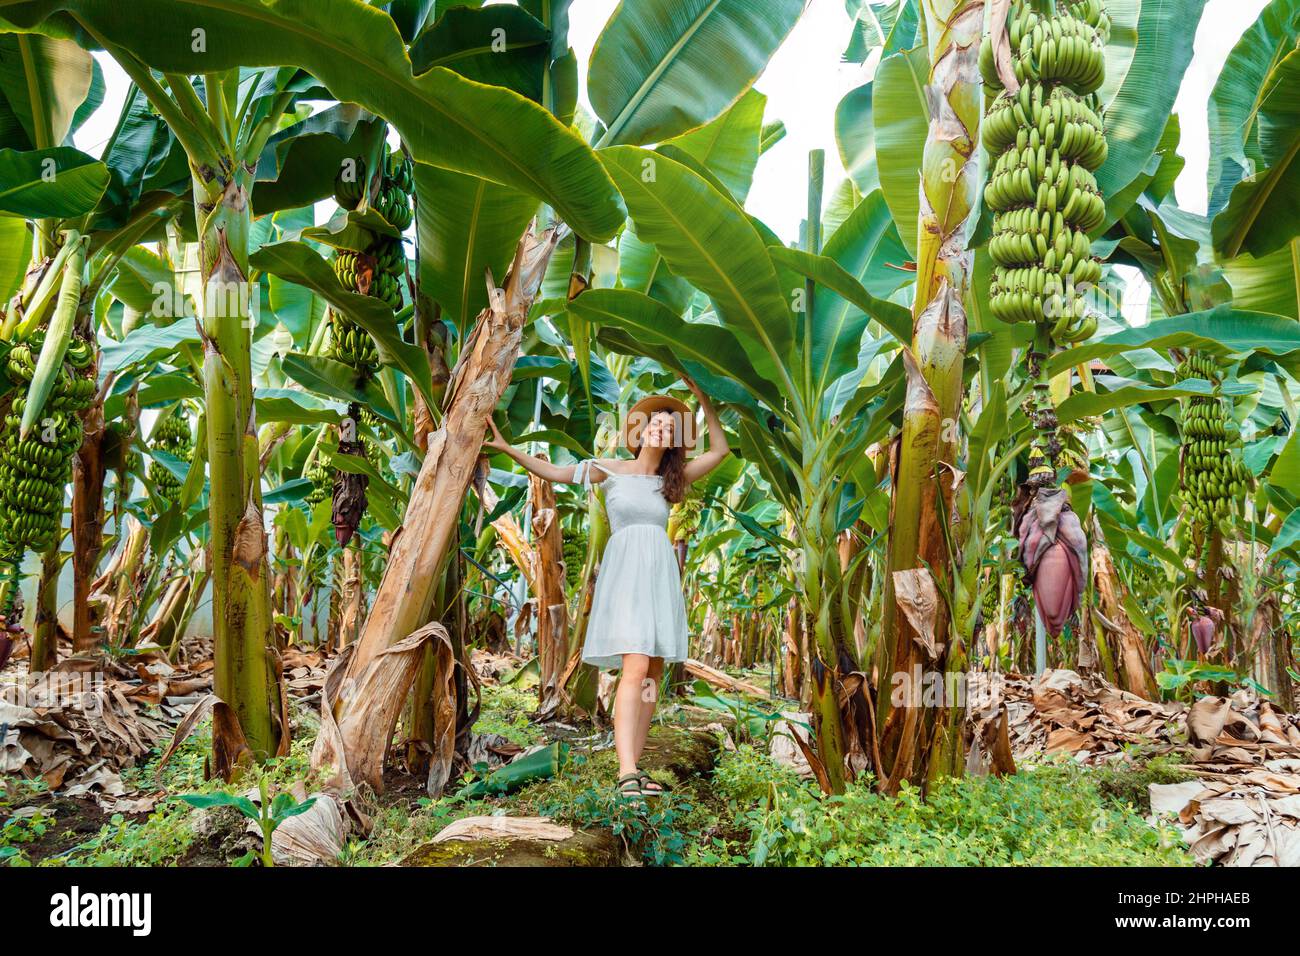 Beautiful woman traveler in dress and hat walks in Banana plantation, tropical garden, jungle or farm. Green tourism, exotic fruits banana producing. Stock Photo